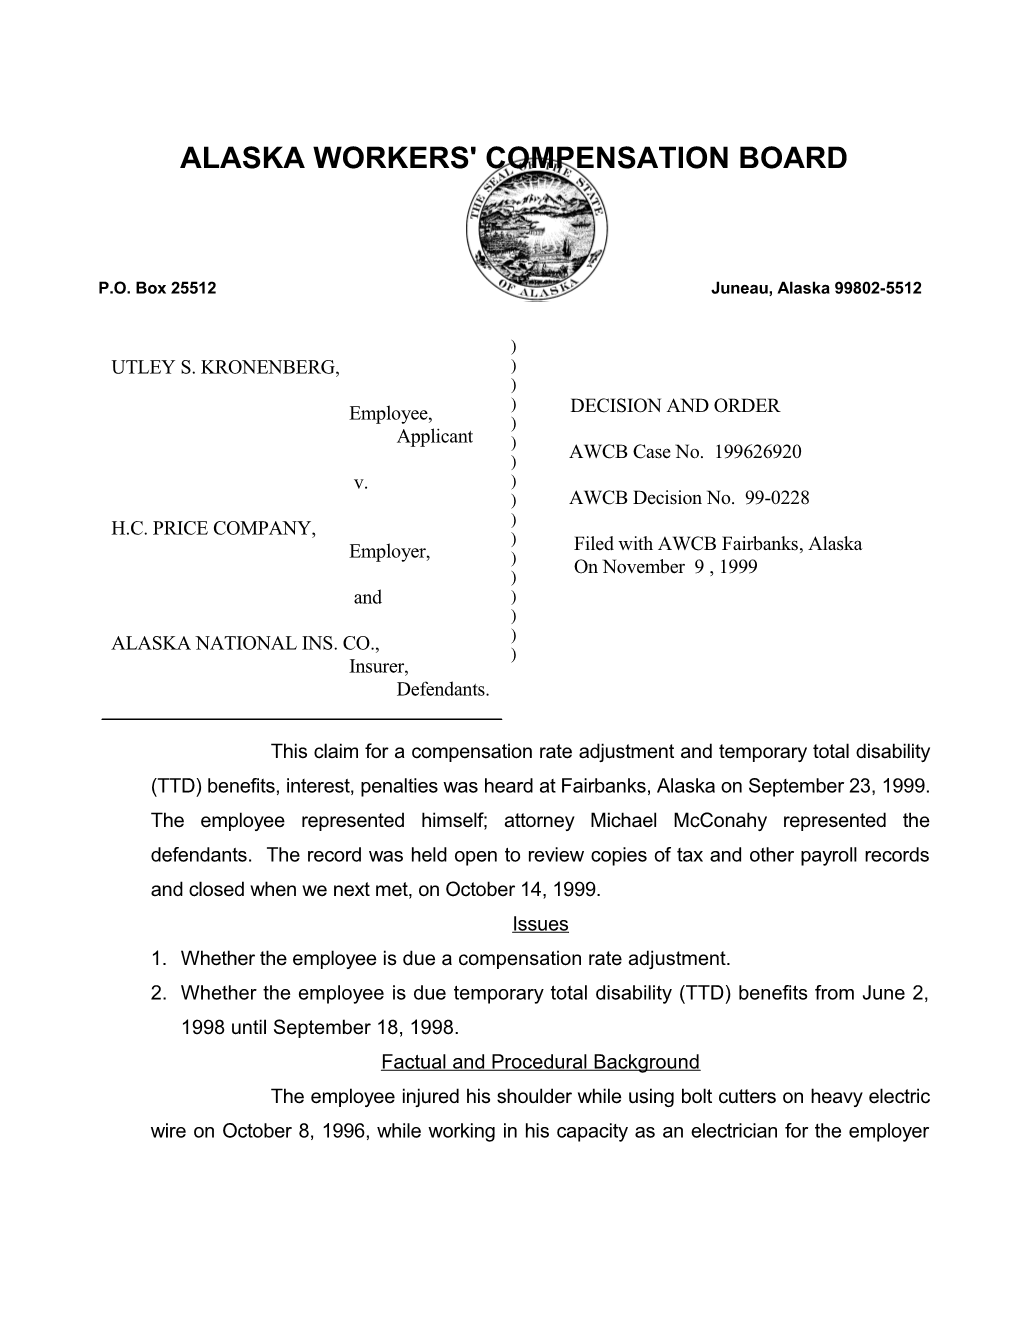 Alaska Workers' Compensation Board s11